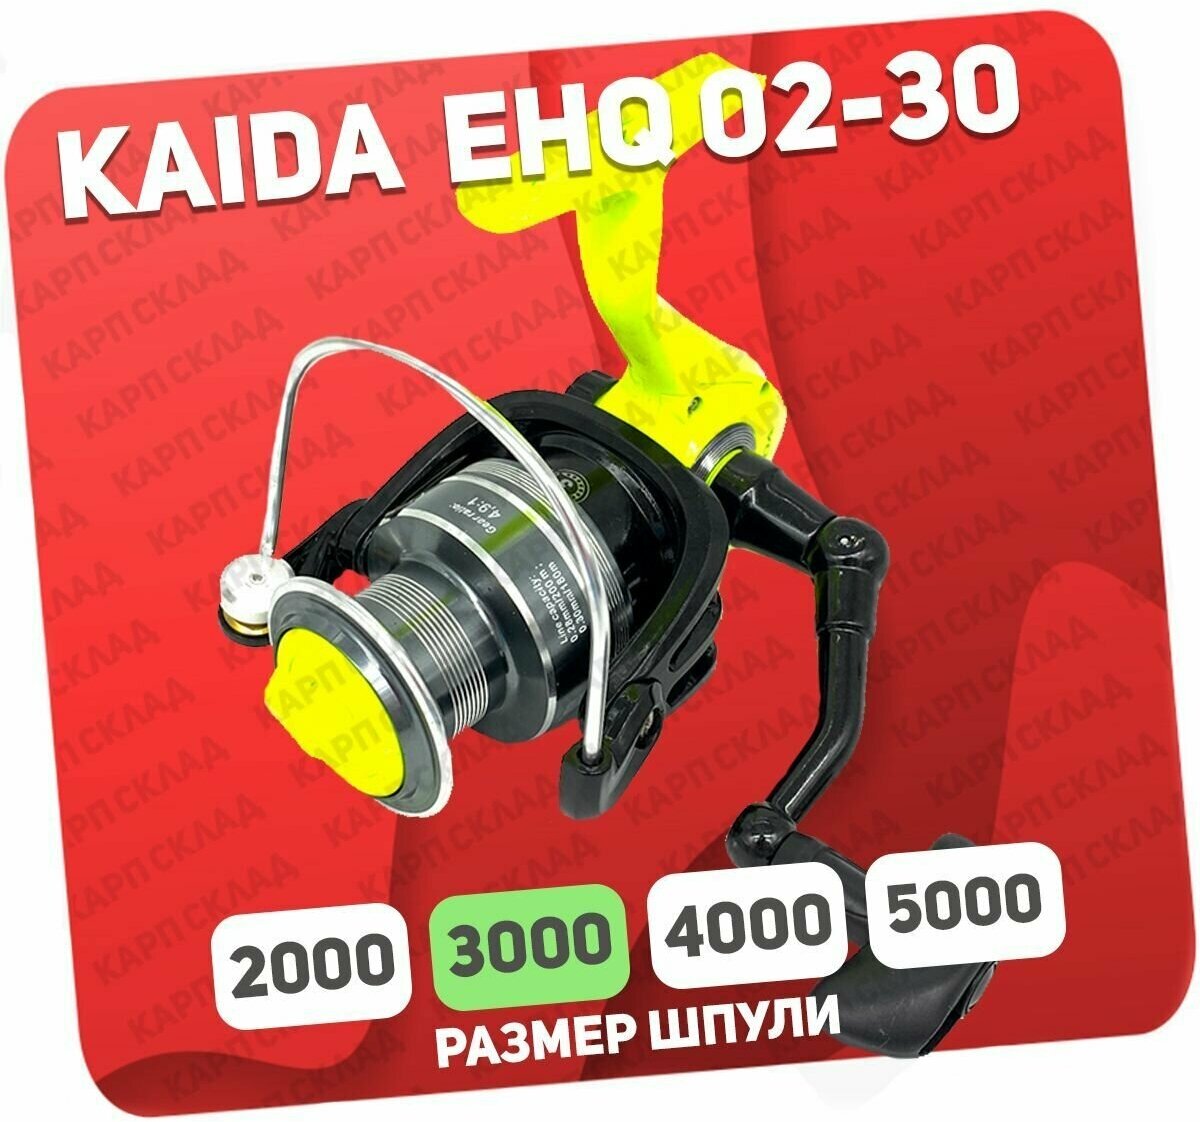 Катушка рыболовная KAIDA EHQ 02 2000 для спиннинга